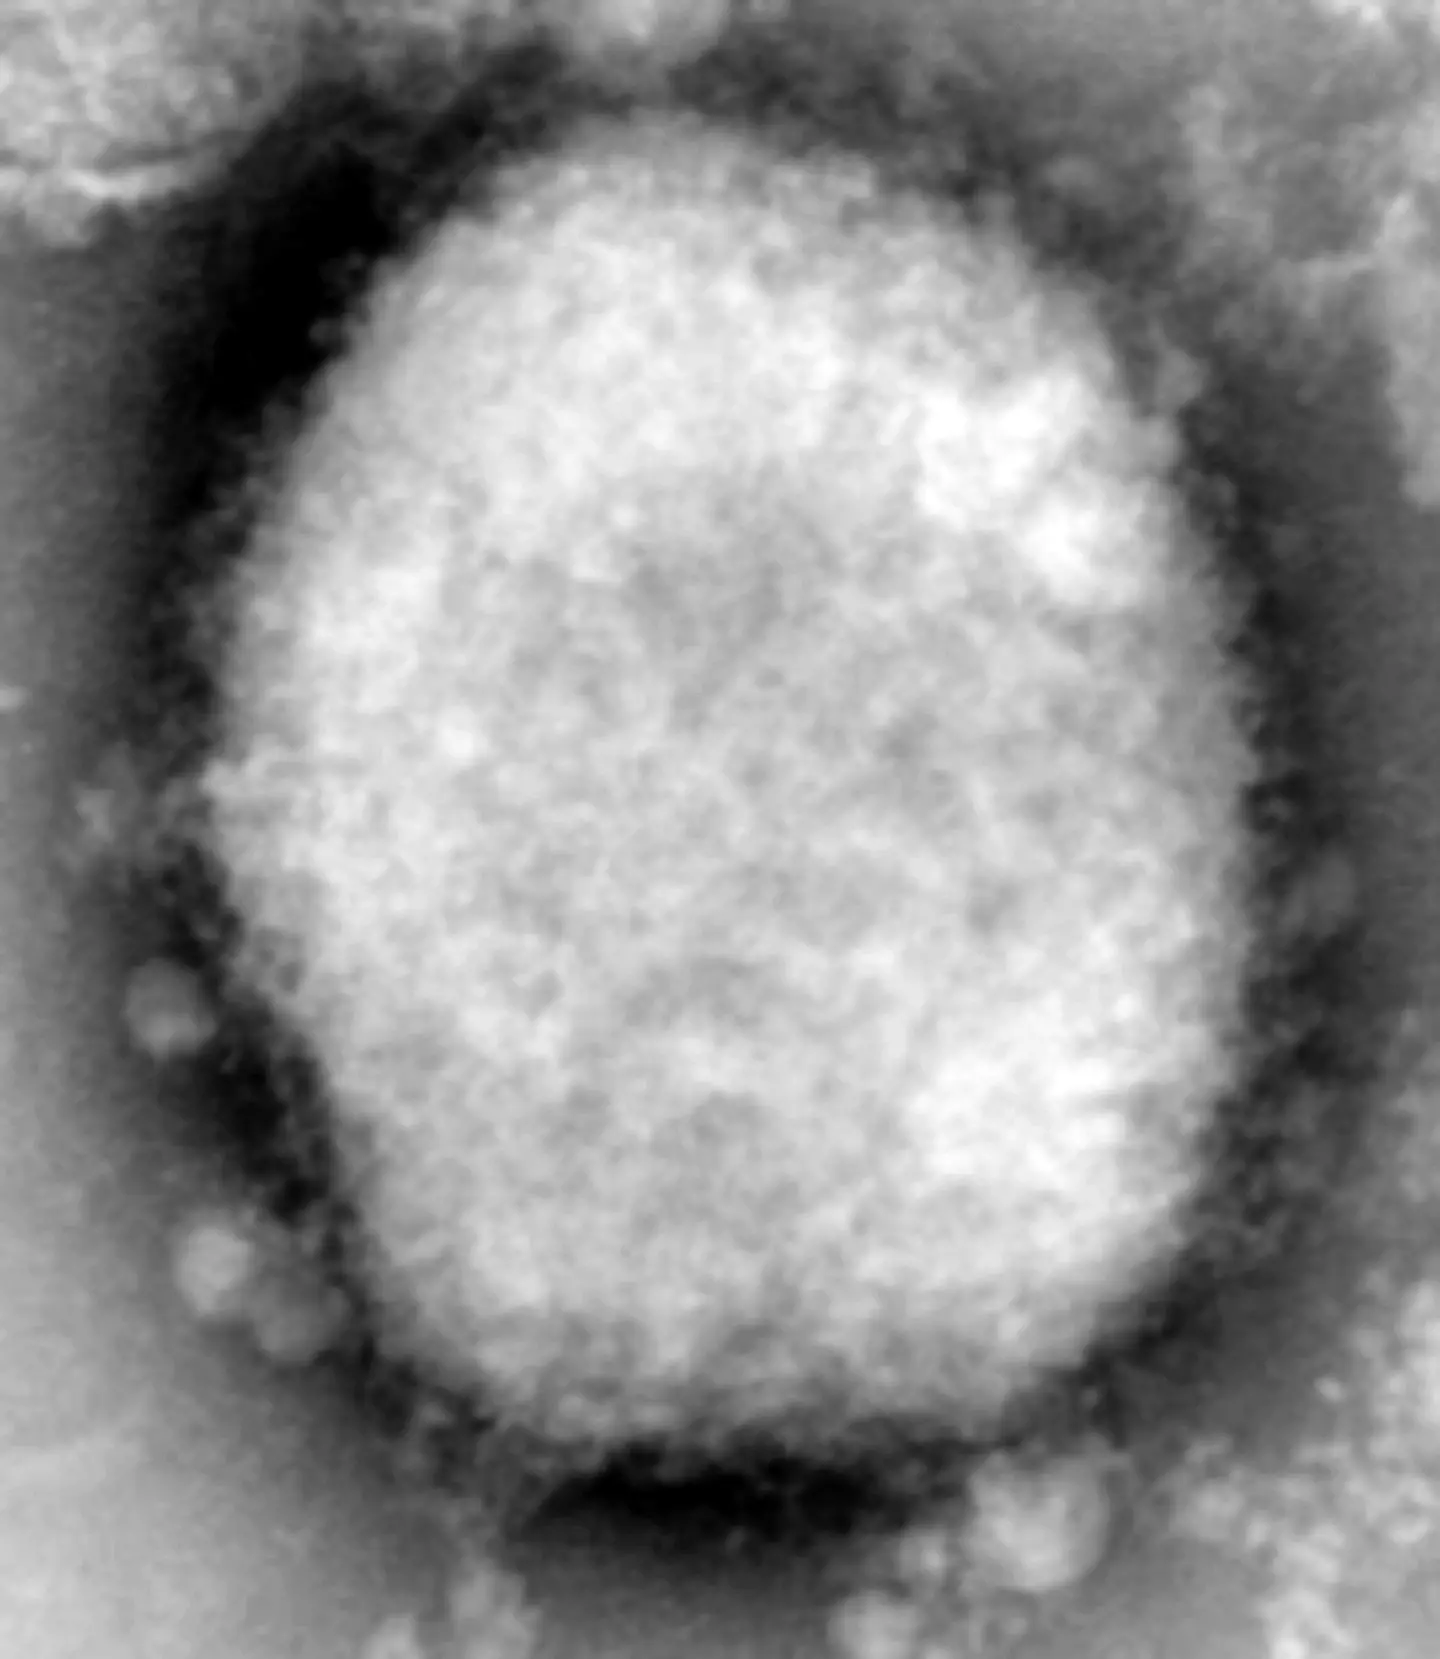 Monkeypox under a microscope.